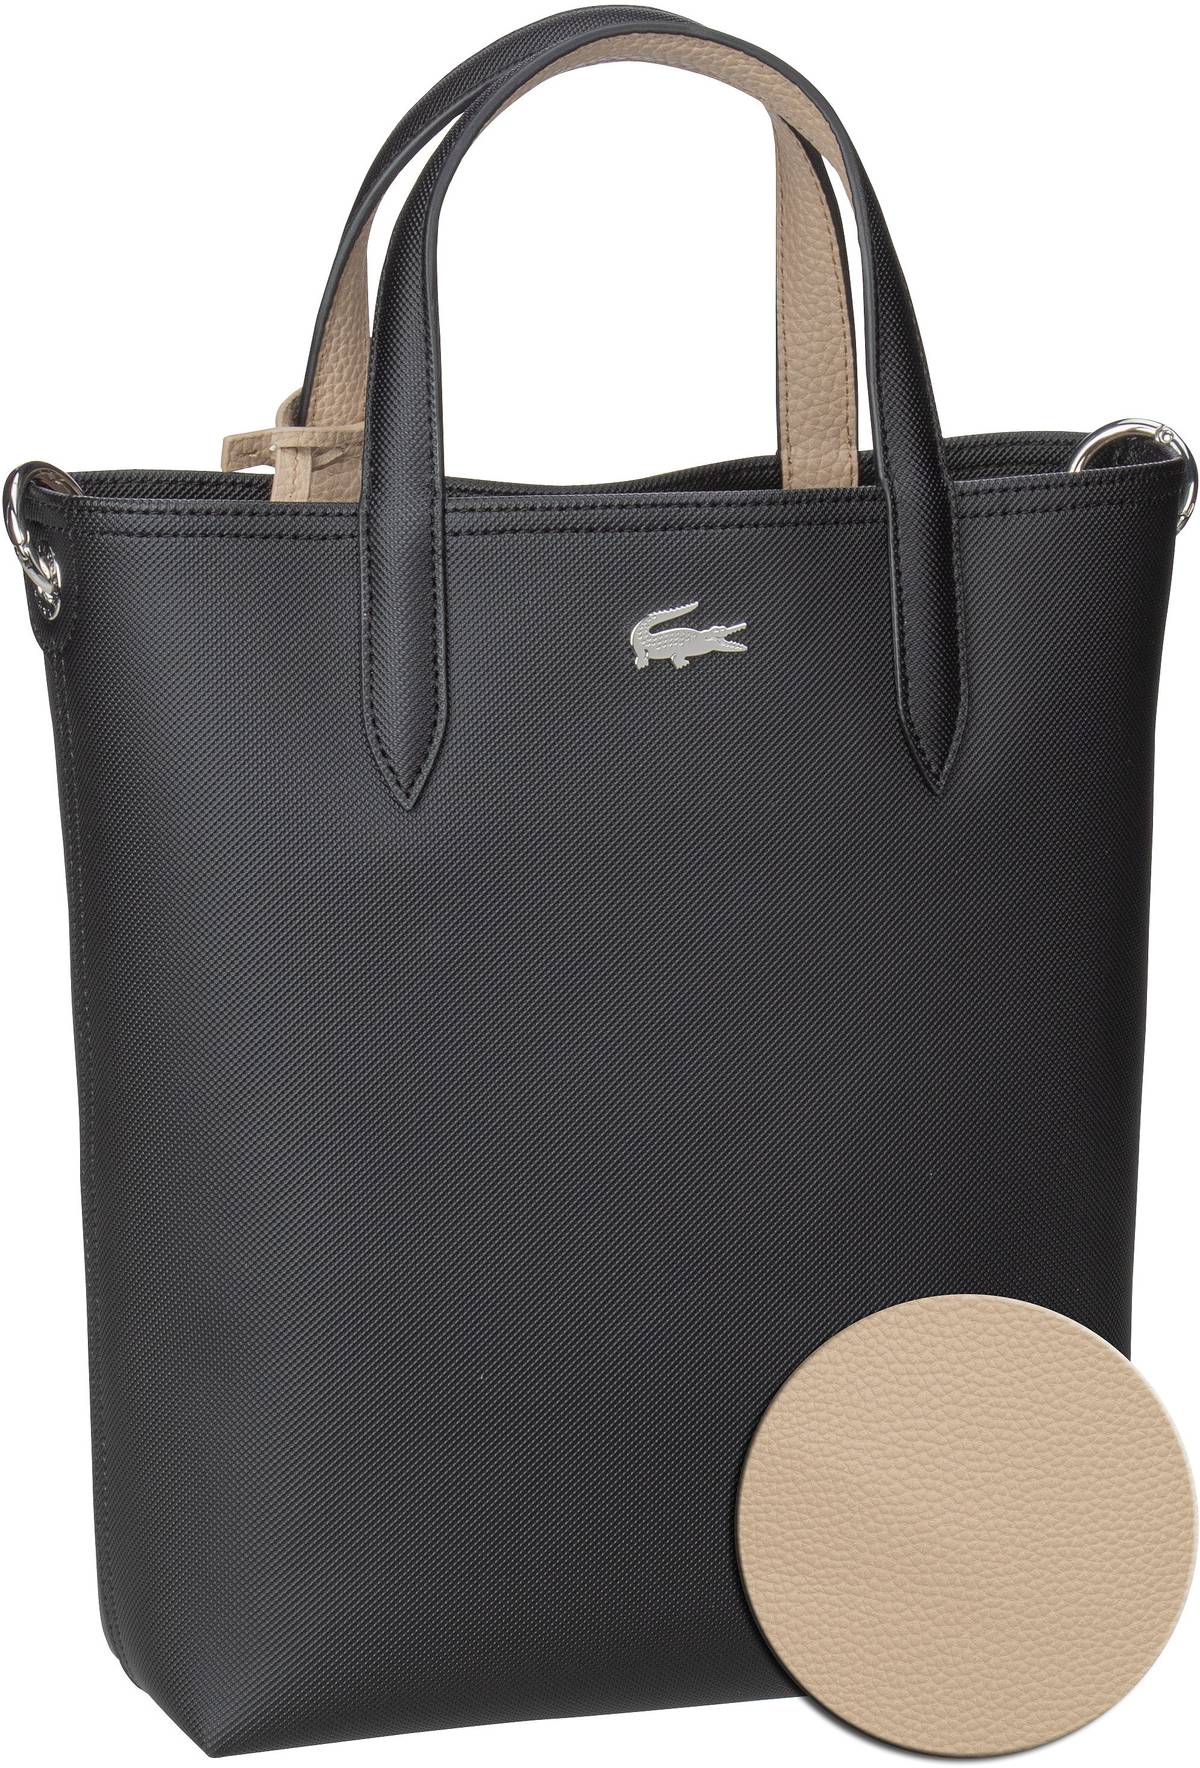 Lacoste Anna Vertical Shopping Bag 2991 - Black/Warm Sand